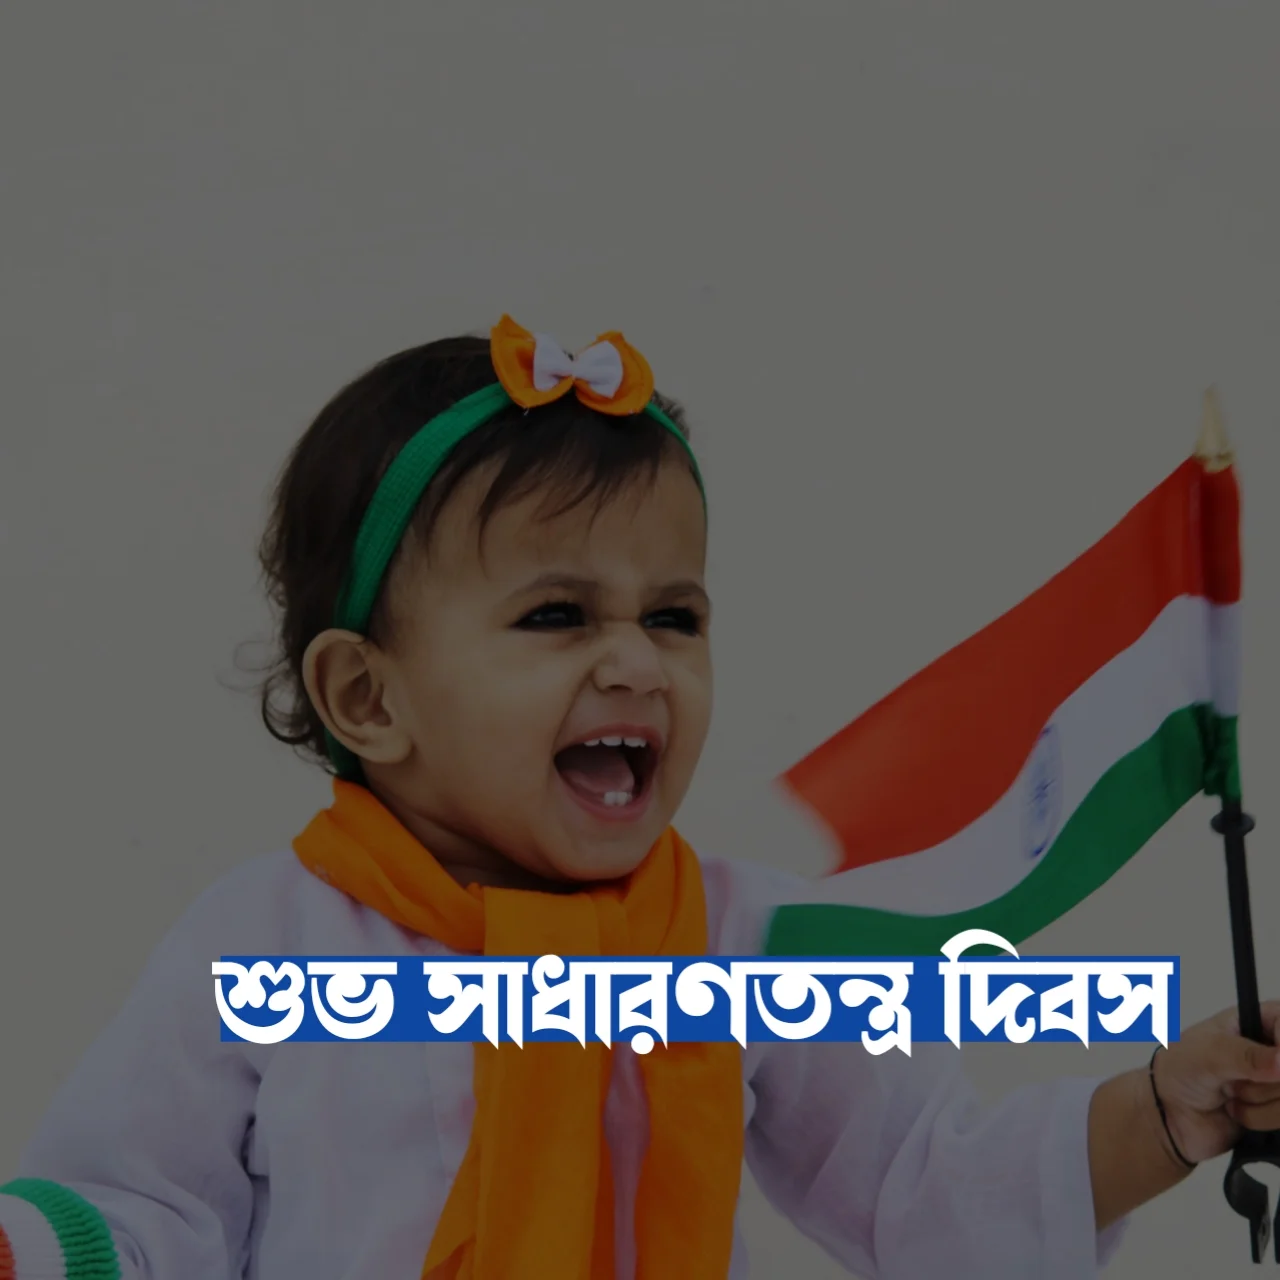 Happy Republic Day wishes bengali